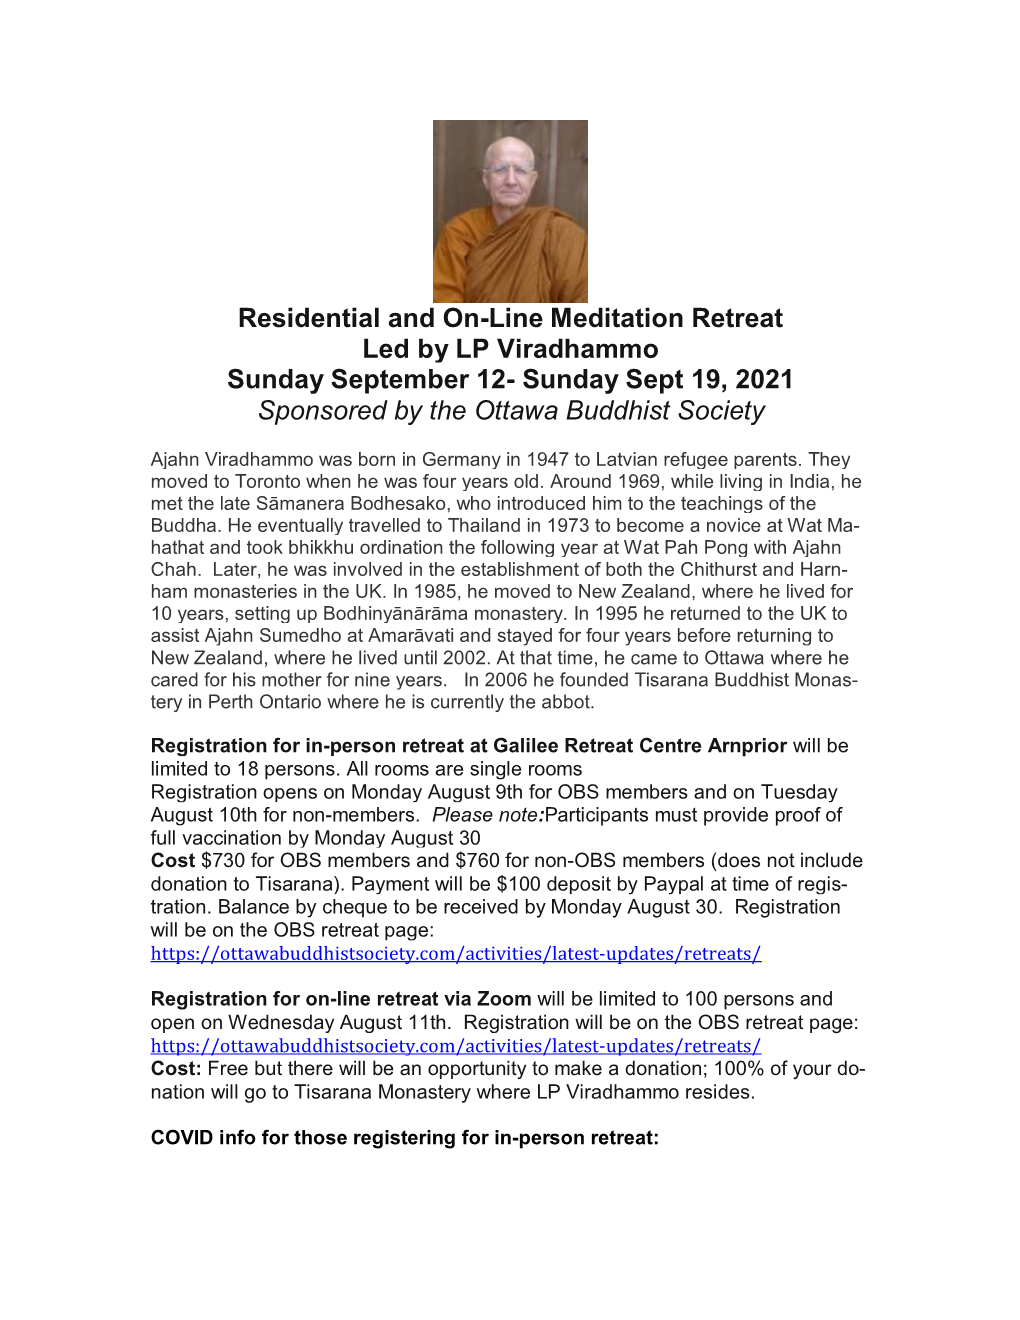 Residential and On-Line Meditation Retreat Led by LP Viradhammo Sunday September 12- Sunday Sept 19, 2021 Sponsored by the Ottawa Buddhist Society